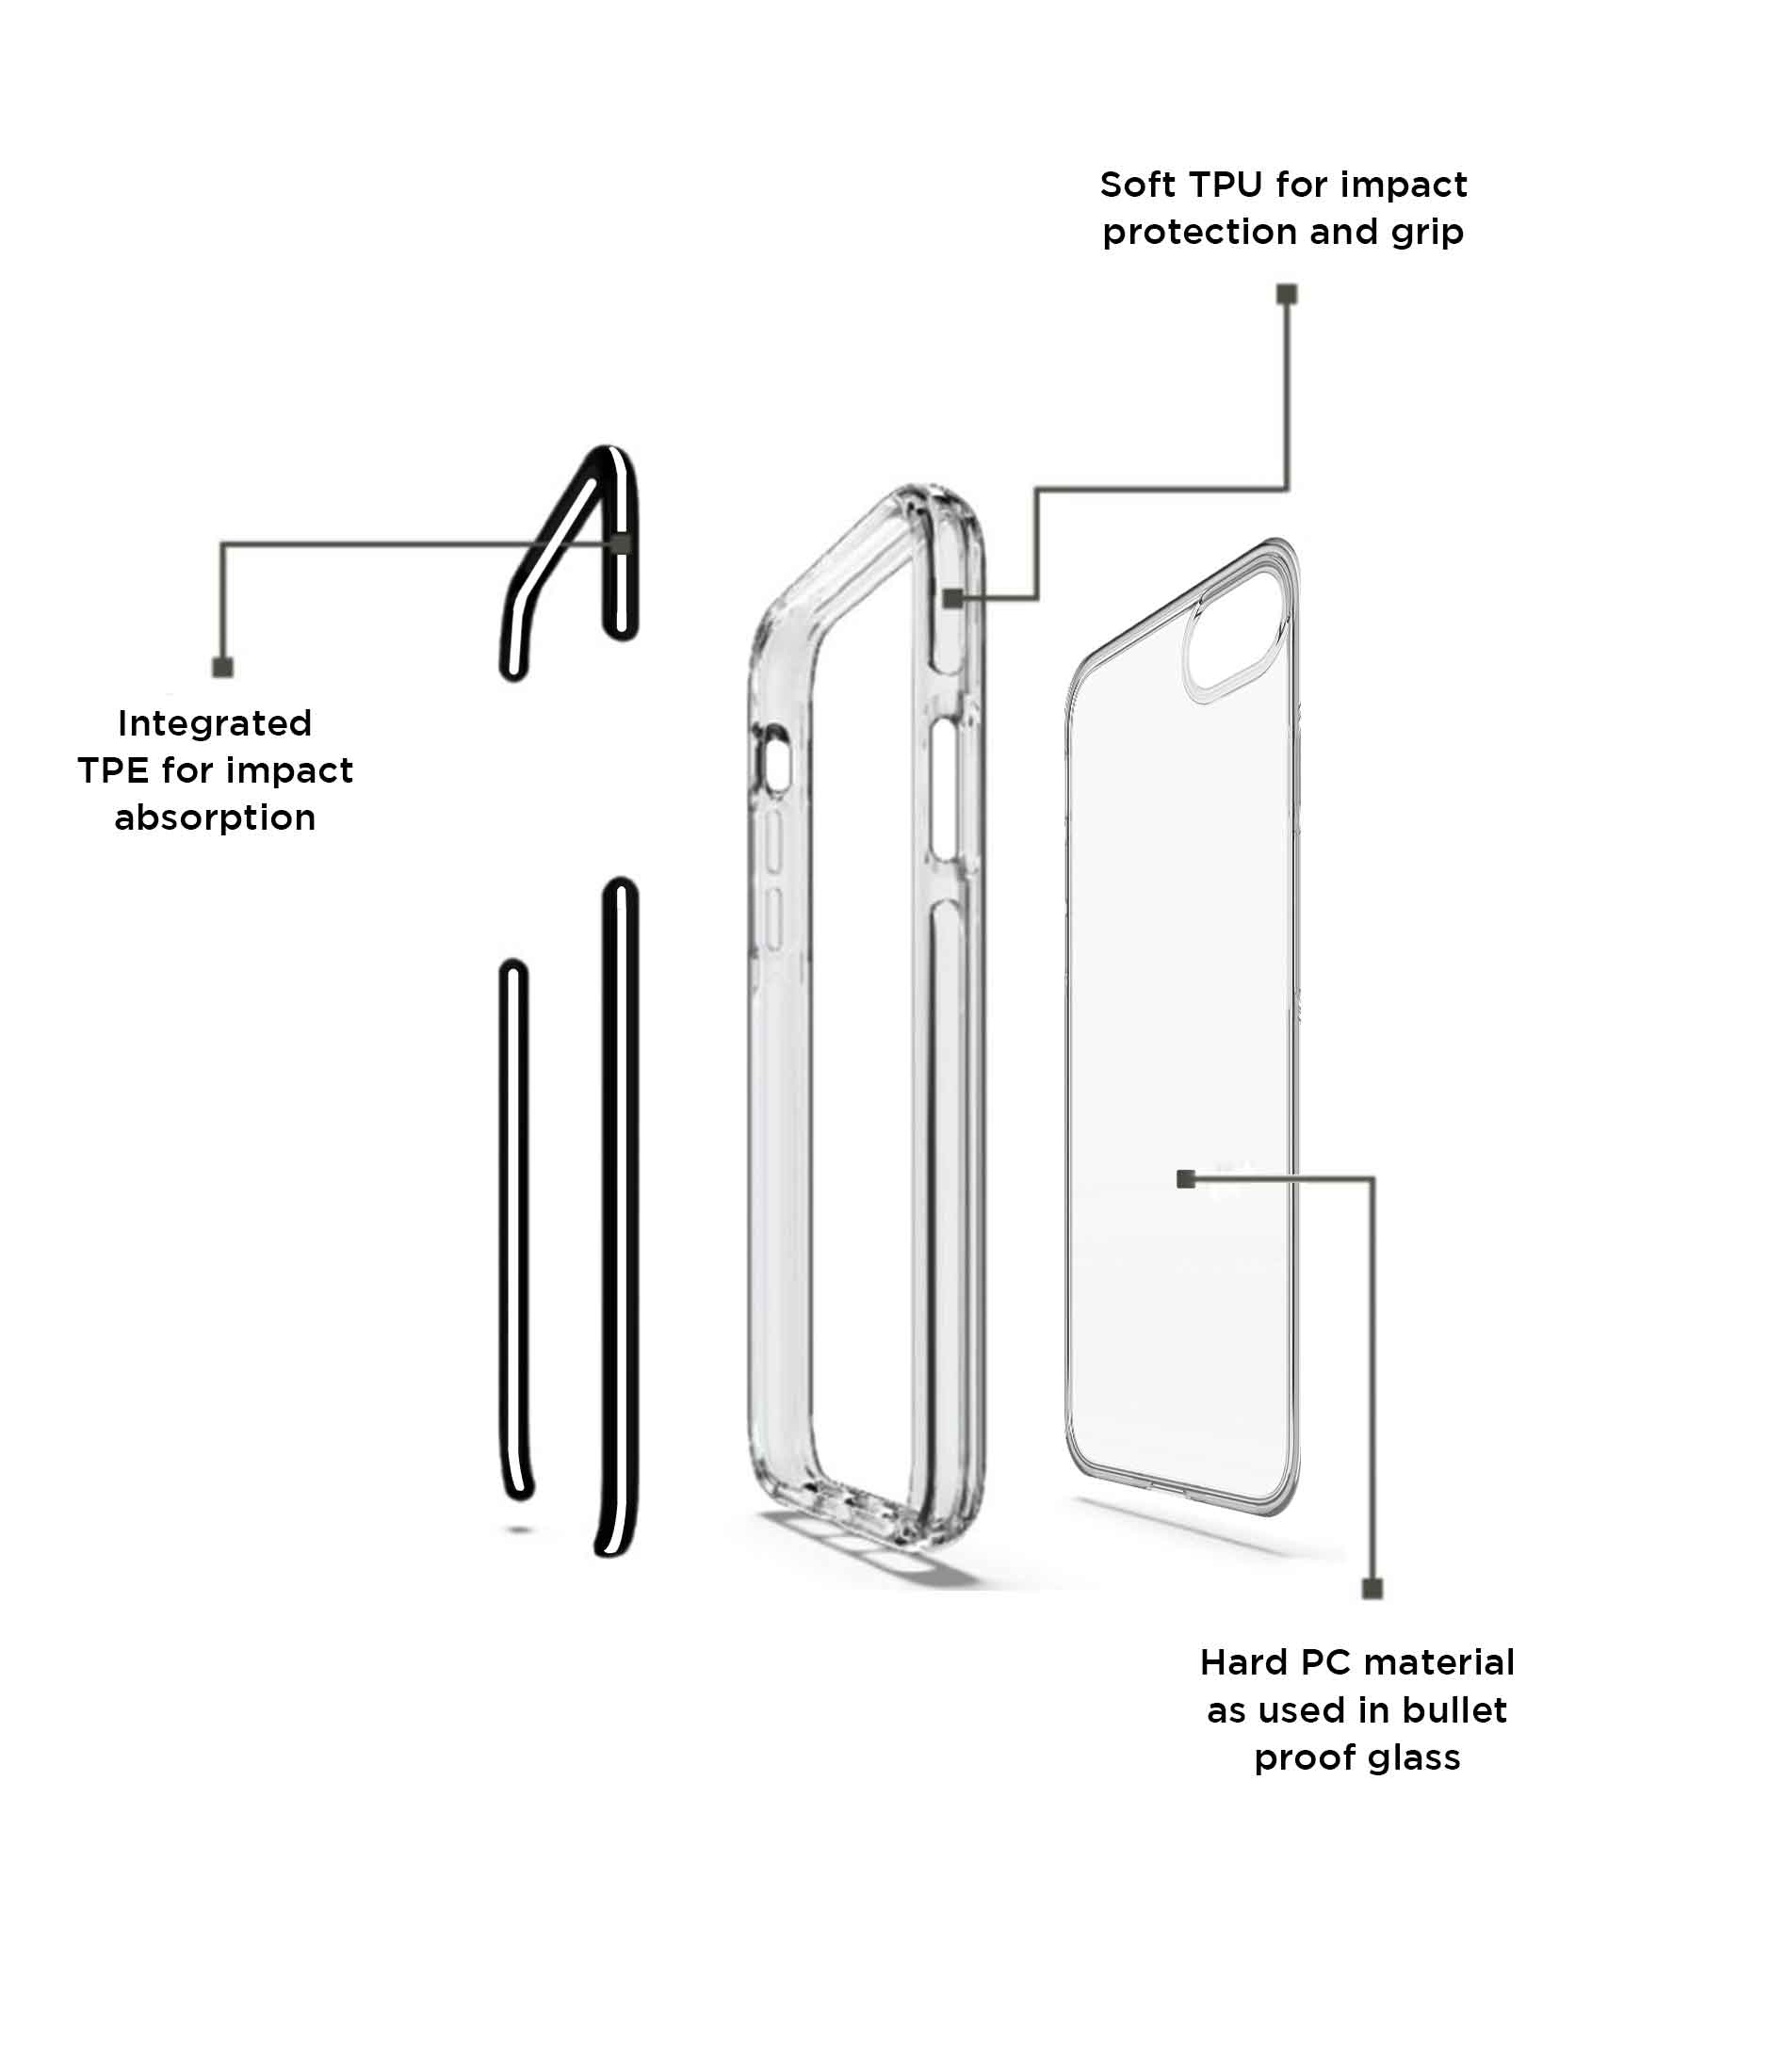 Illuminated Groot - Extreme Phone Case for iPhone 6 Plus